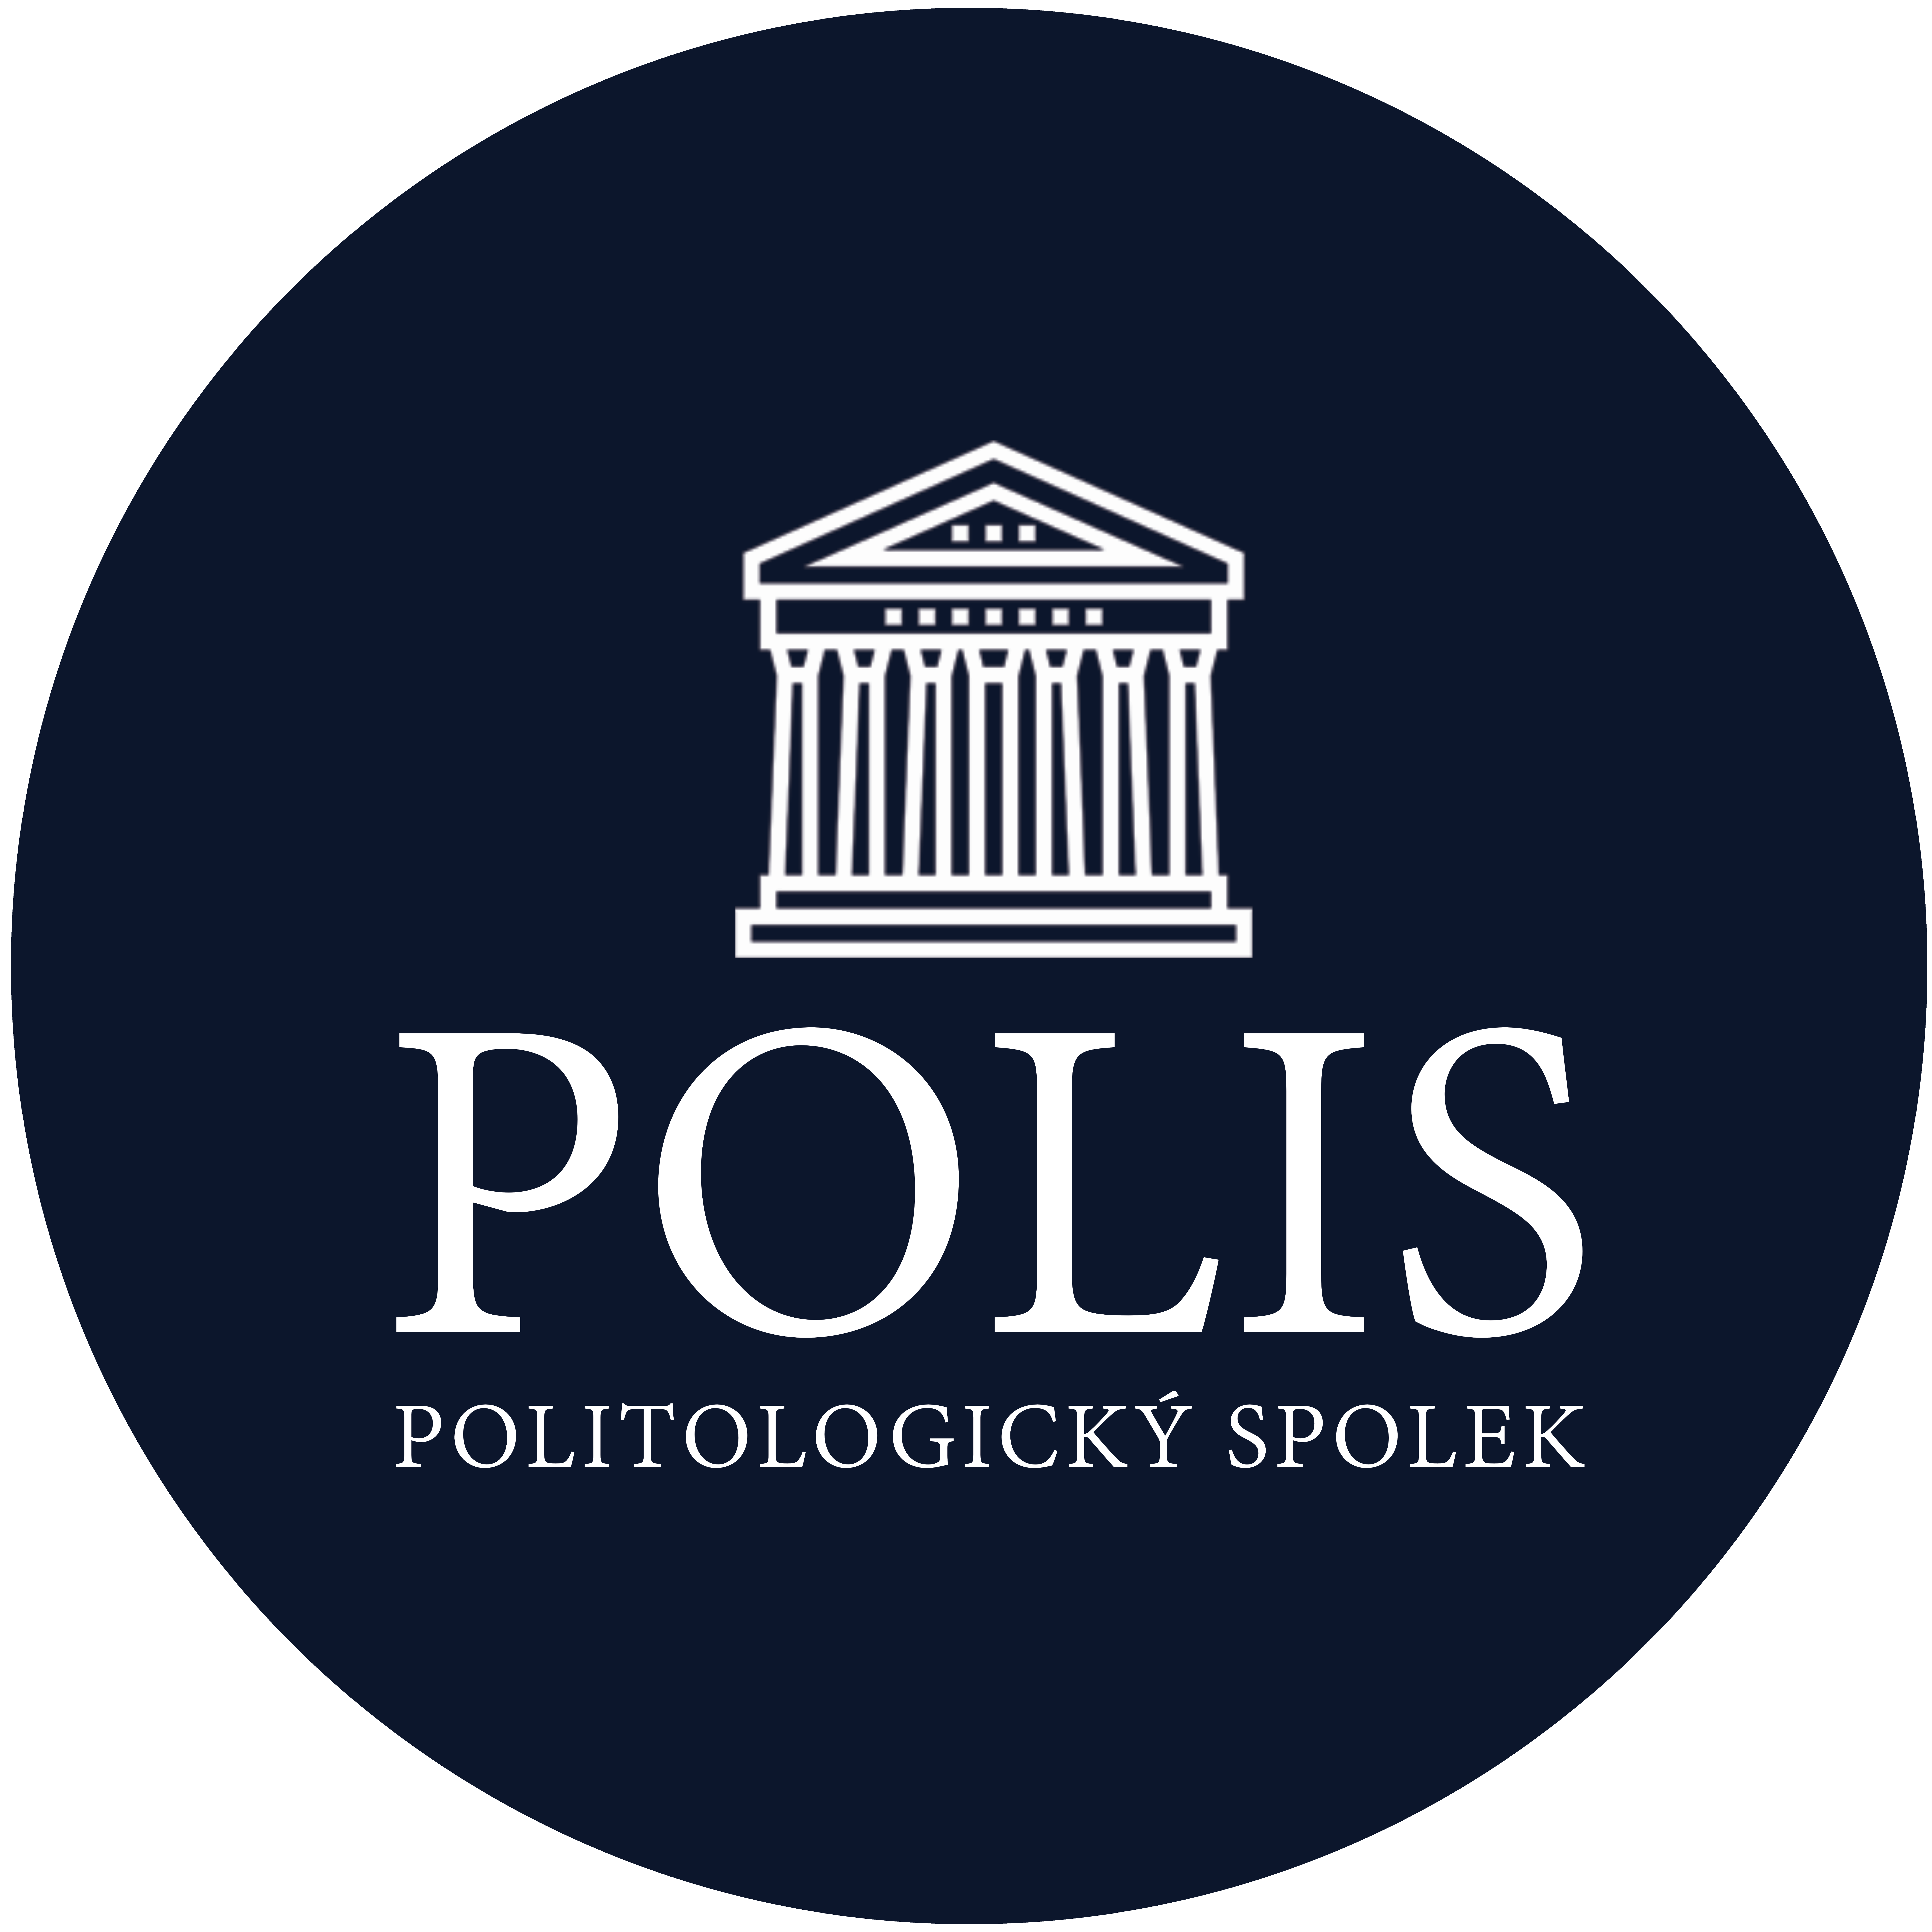 polis logo round 2MB